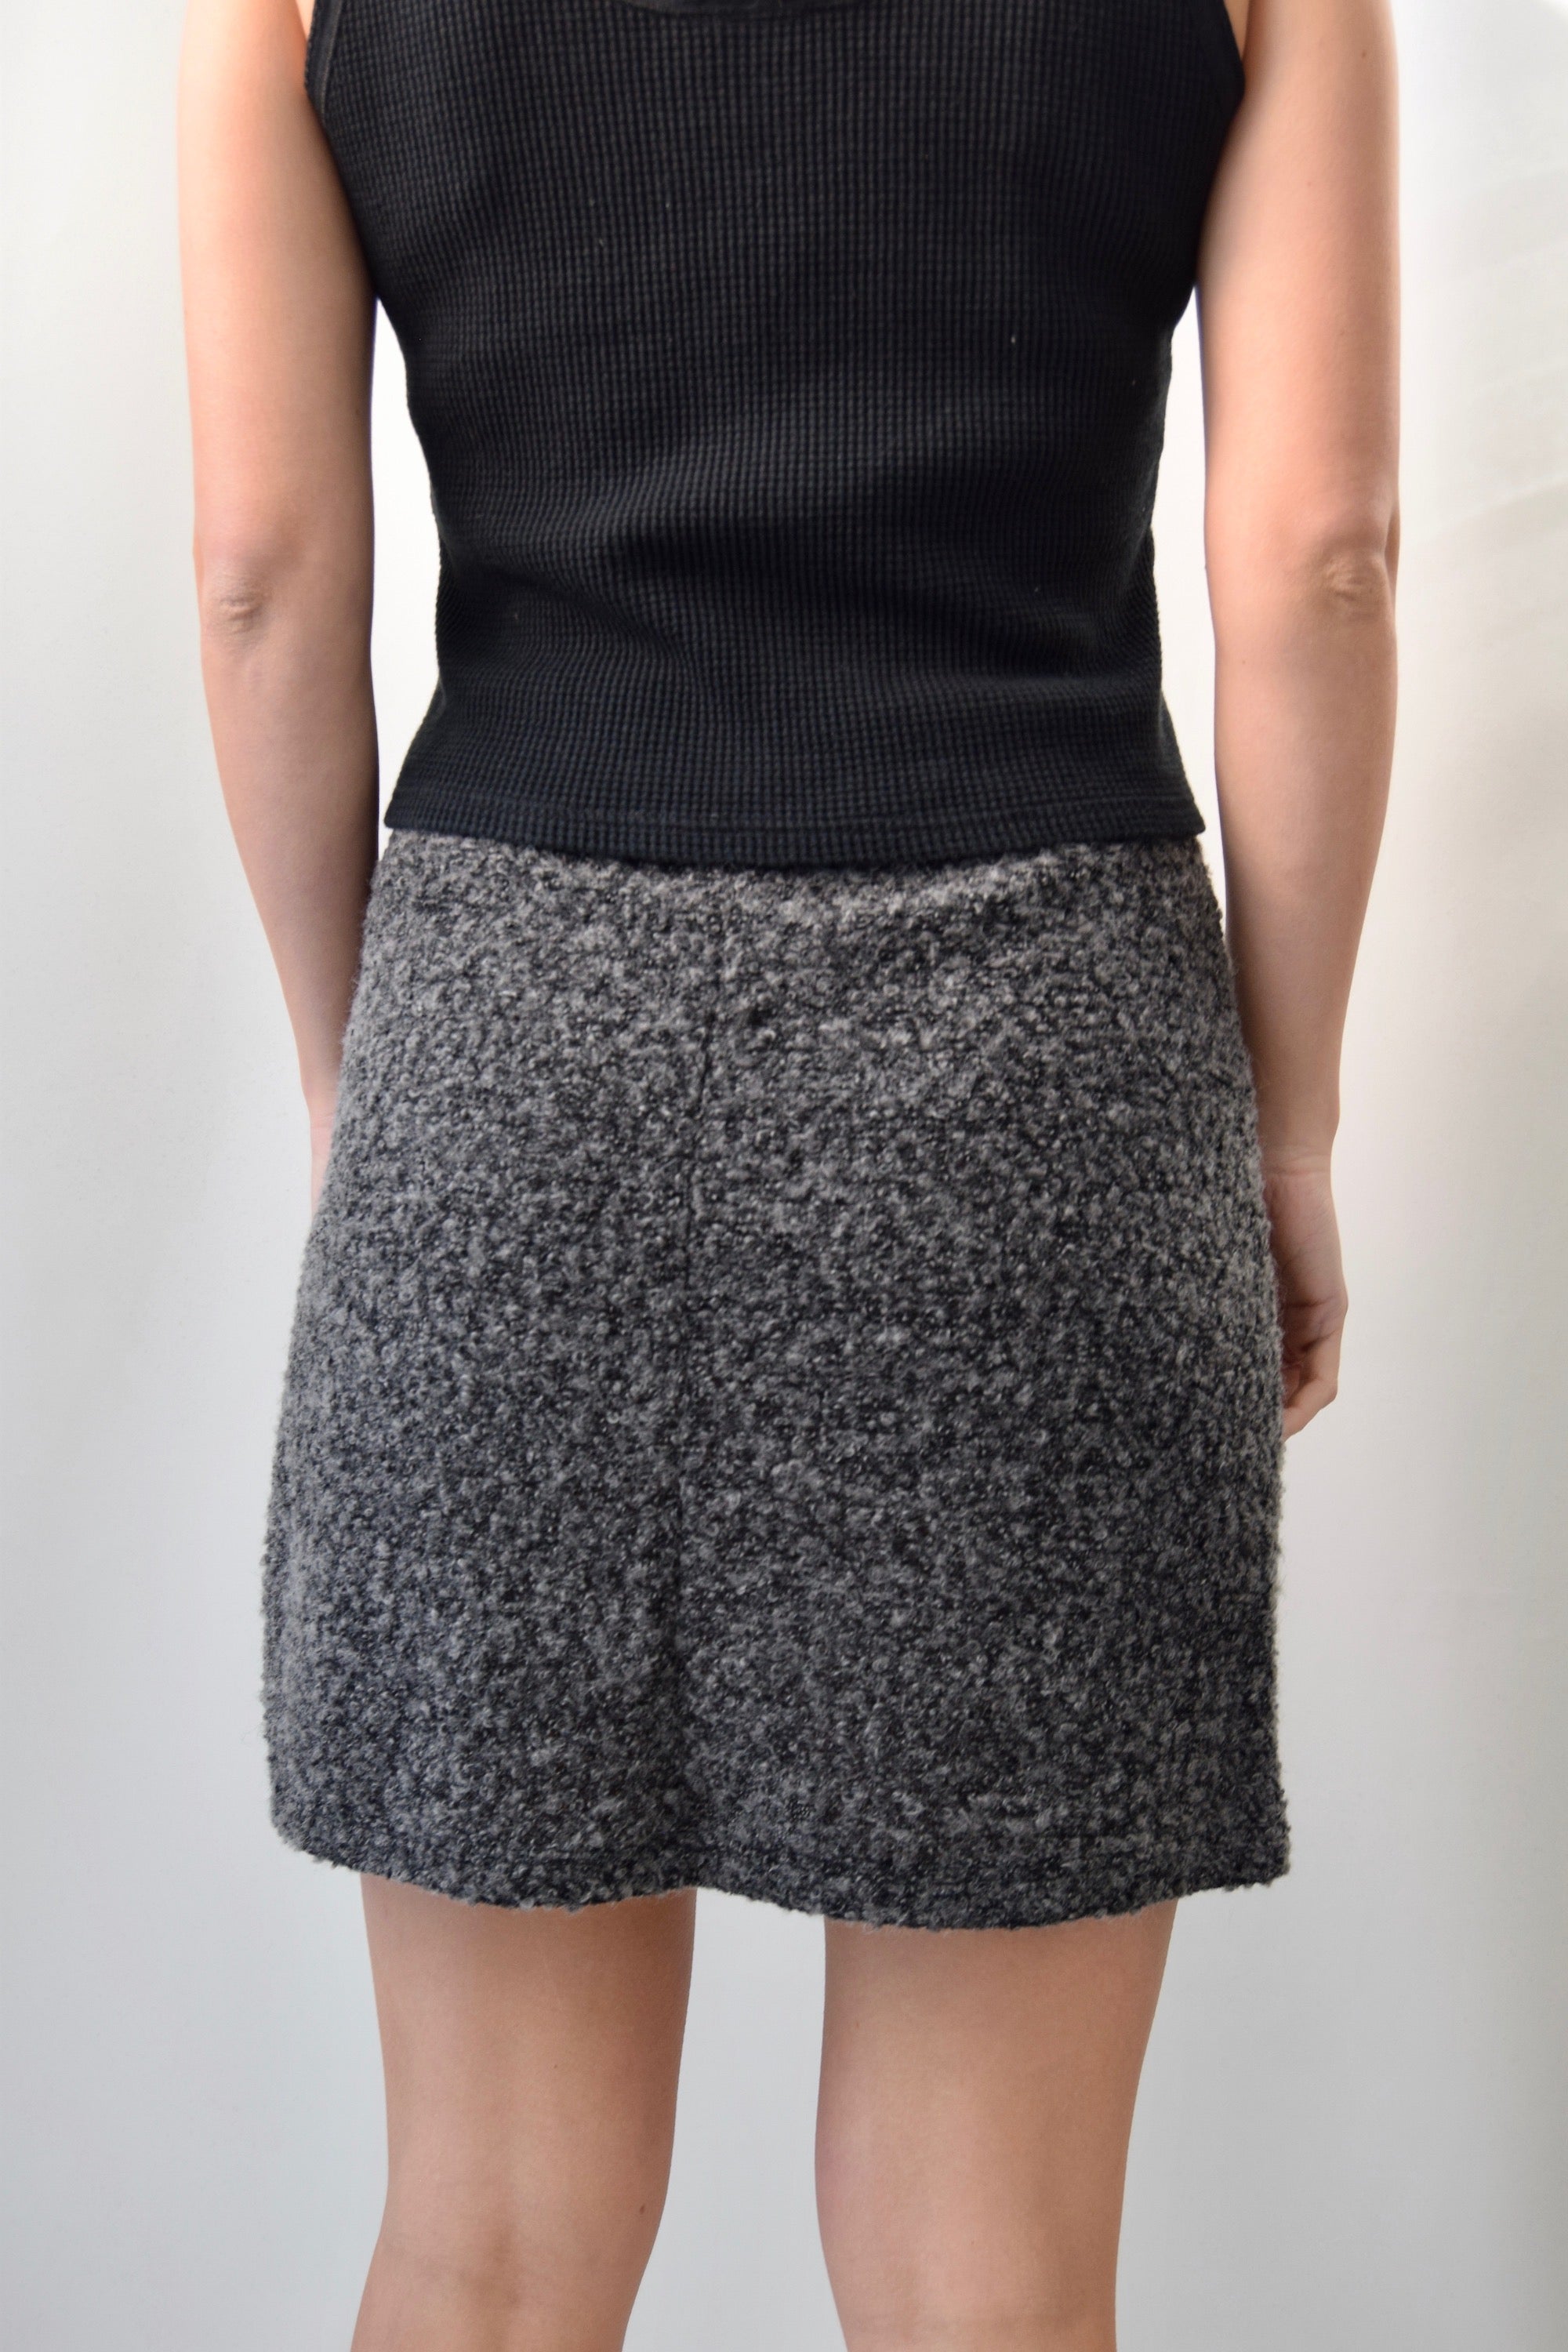 Grey Textured Knit Skirt